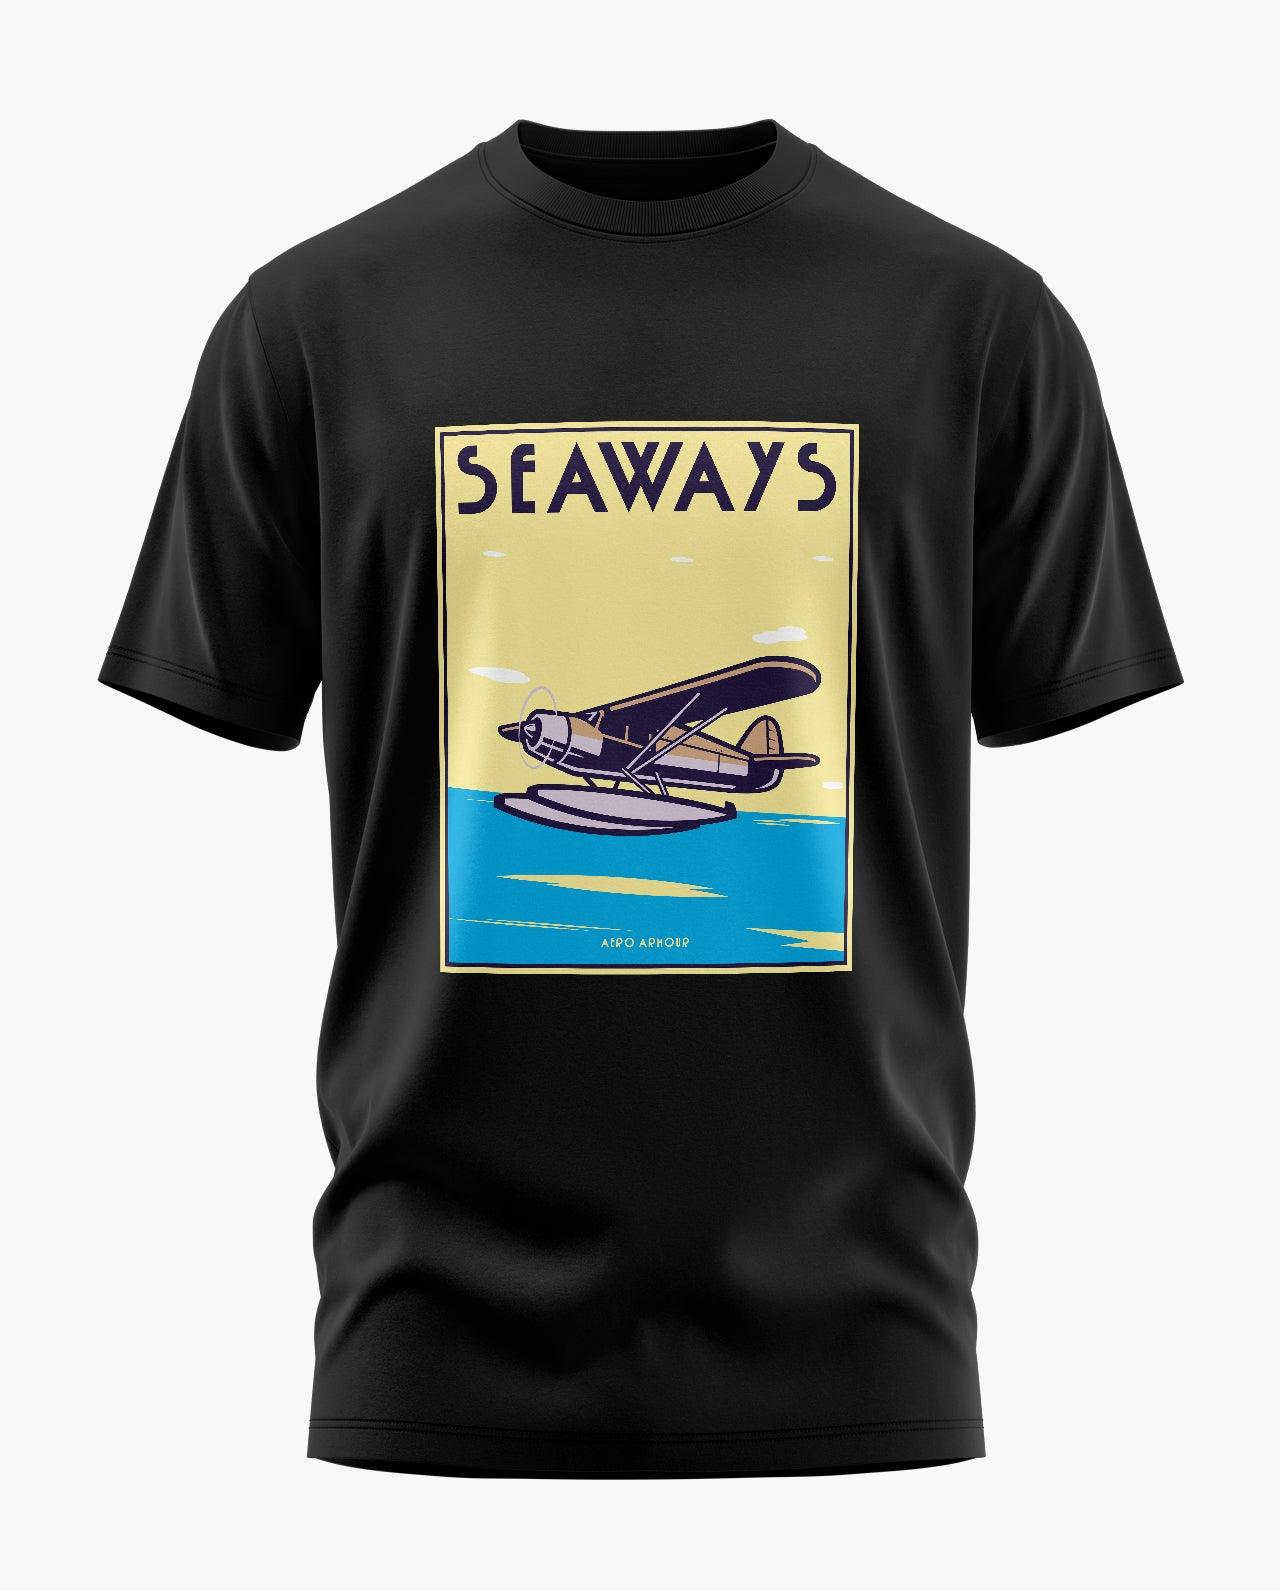 Seaways T-Shirt - Aero Armour